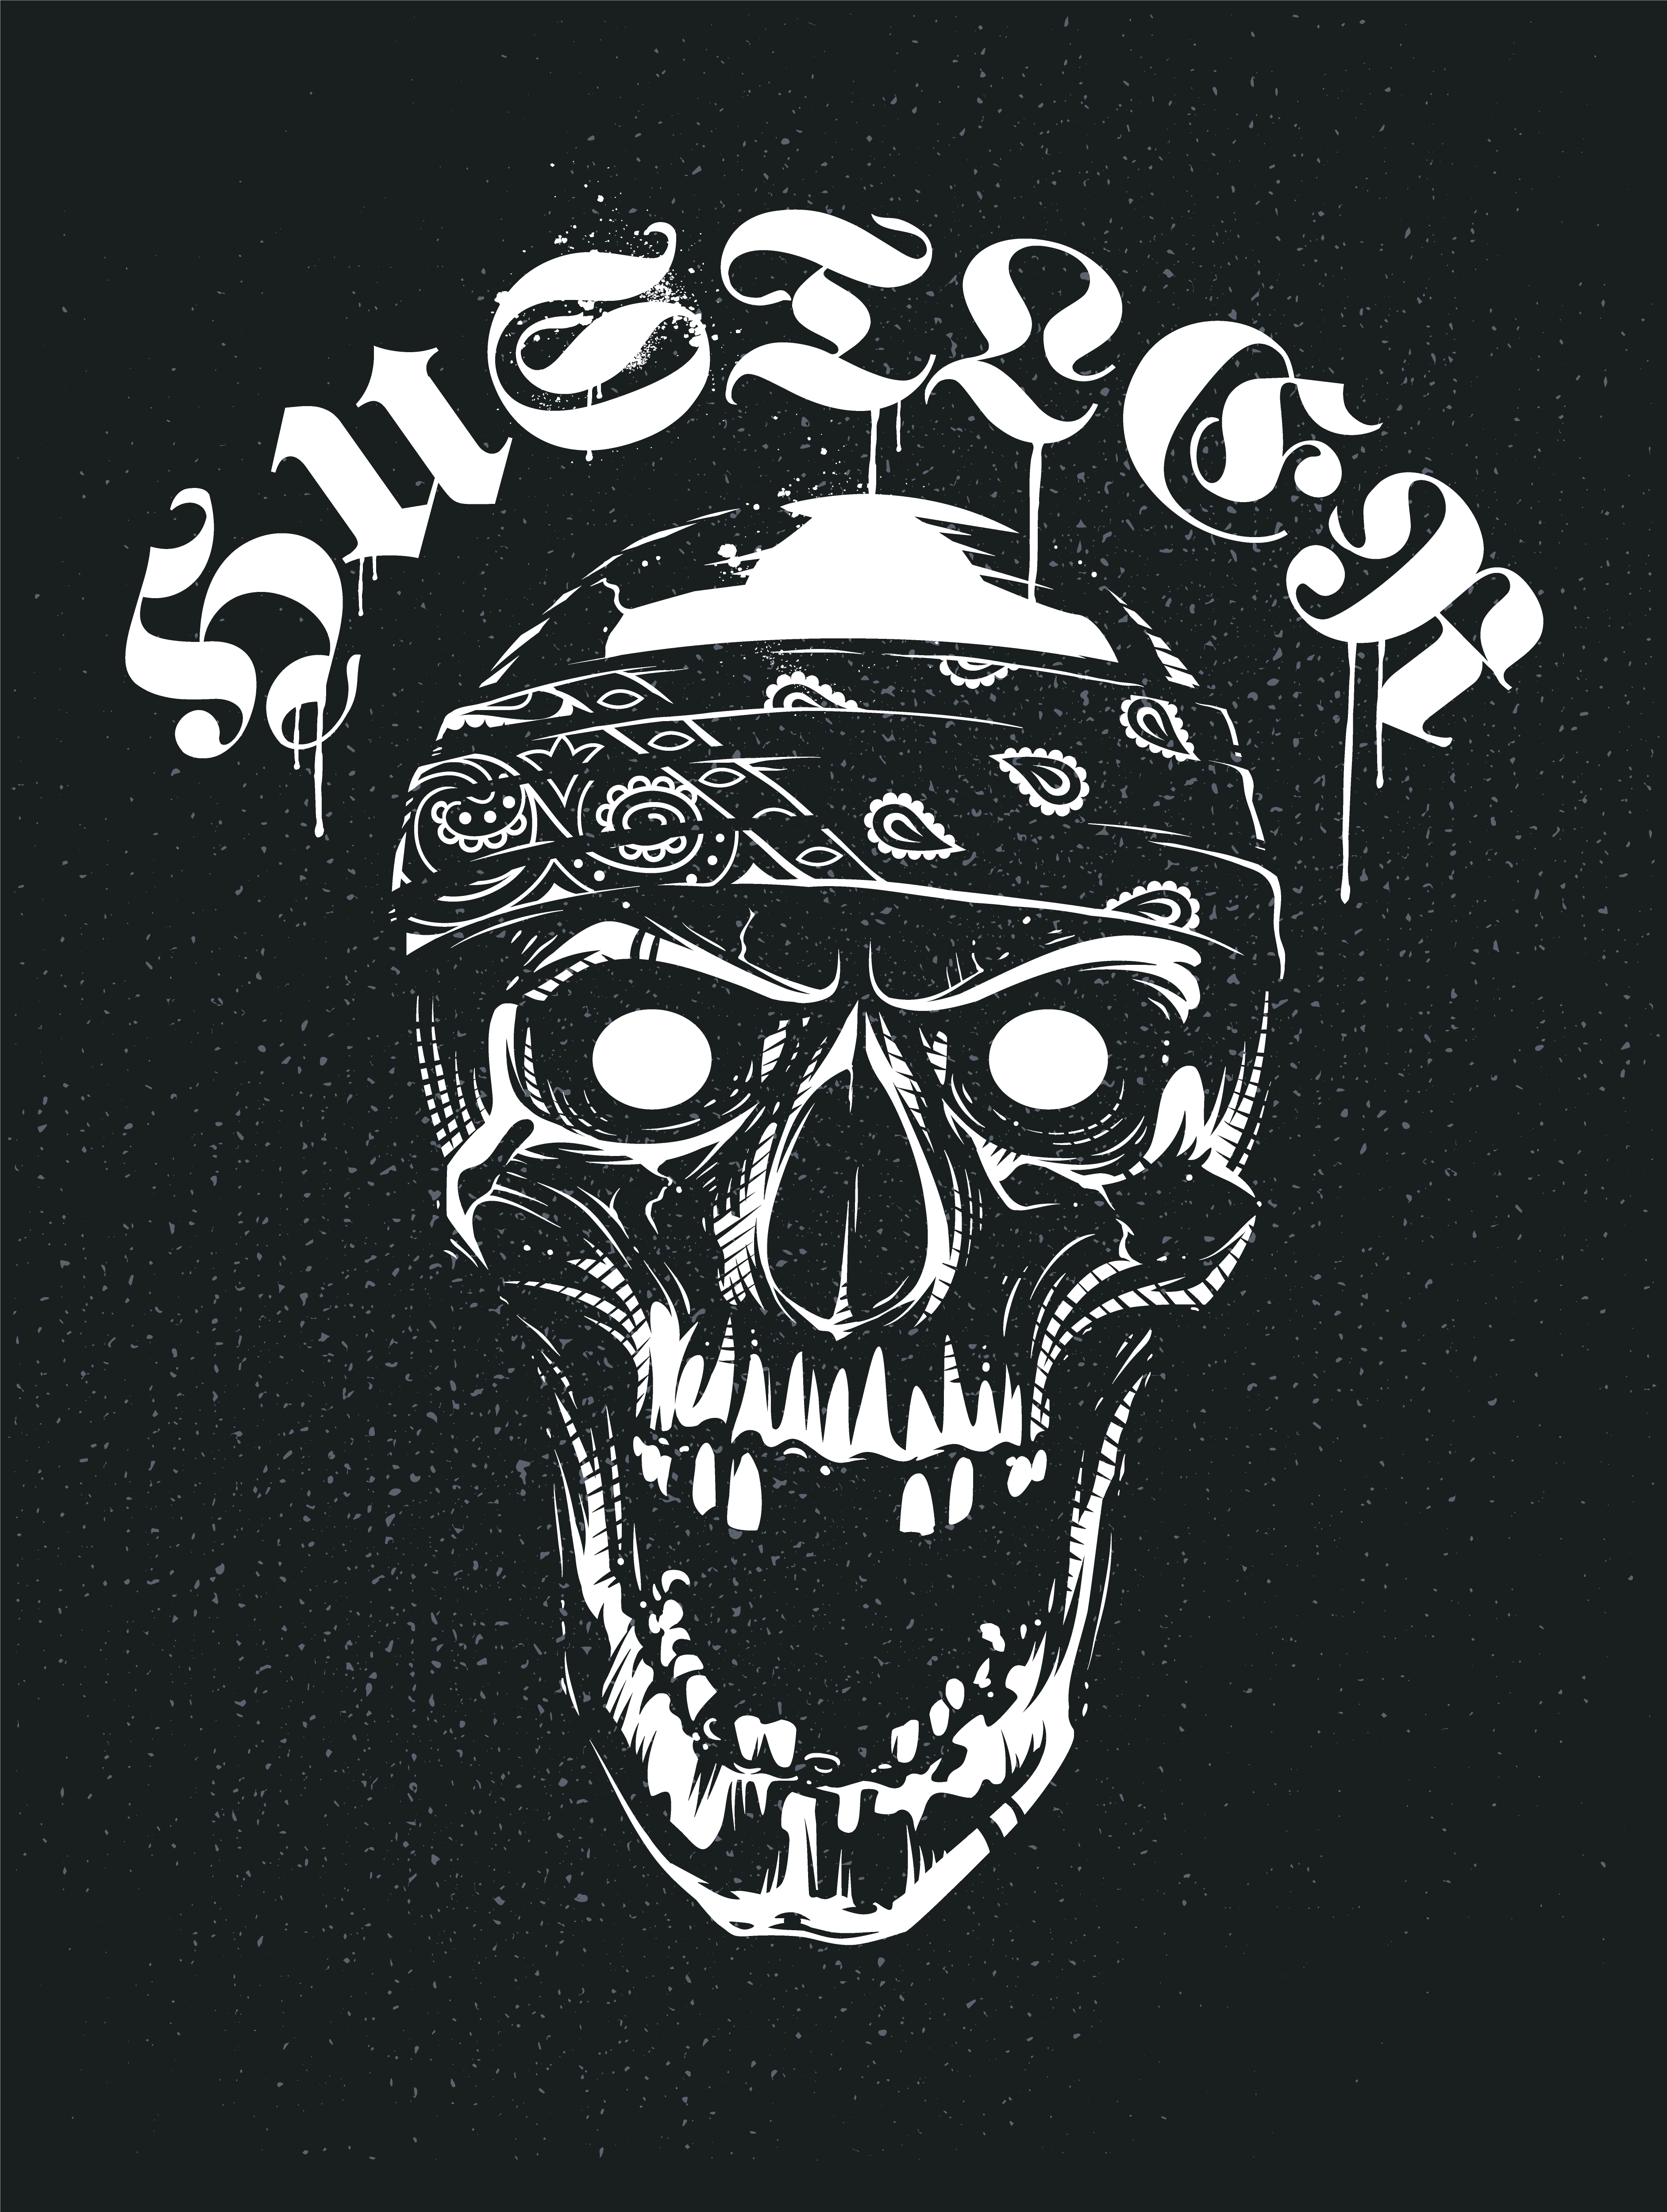 Grunge Skull in Bandana with Hustler Typography 376582 